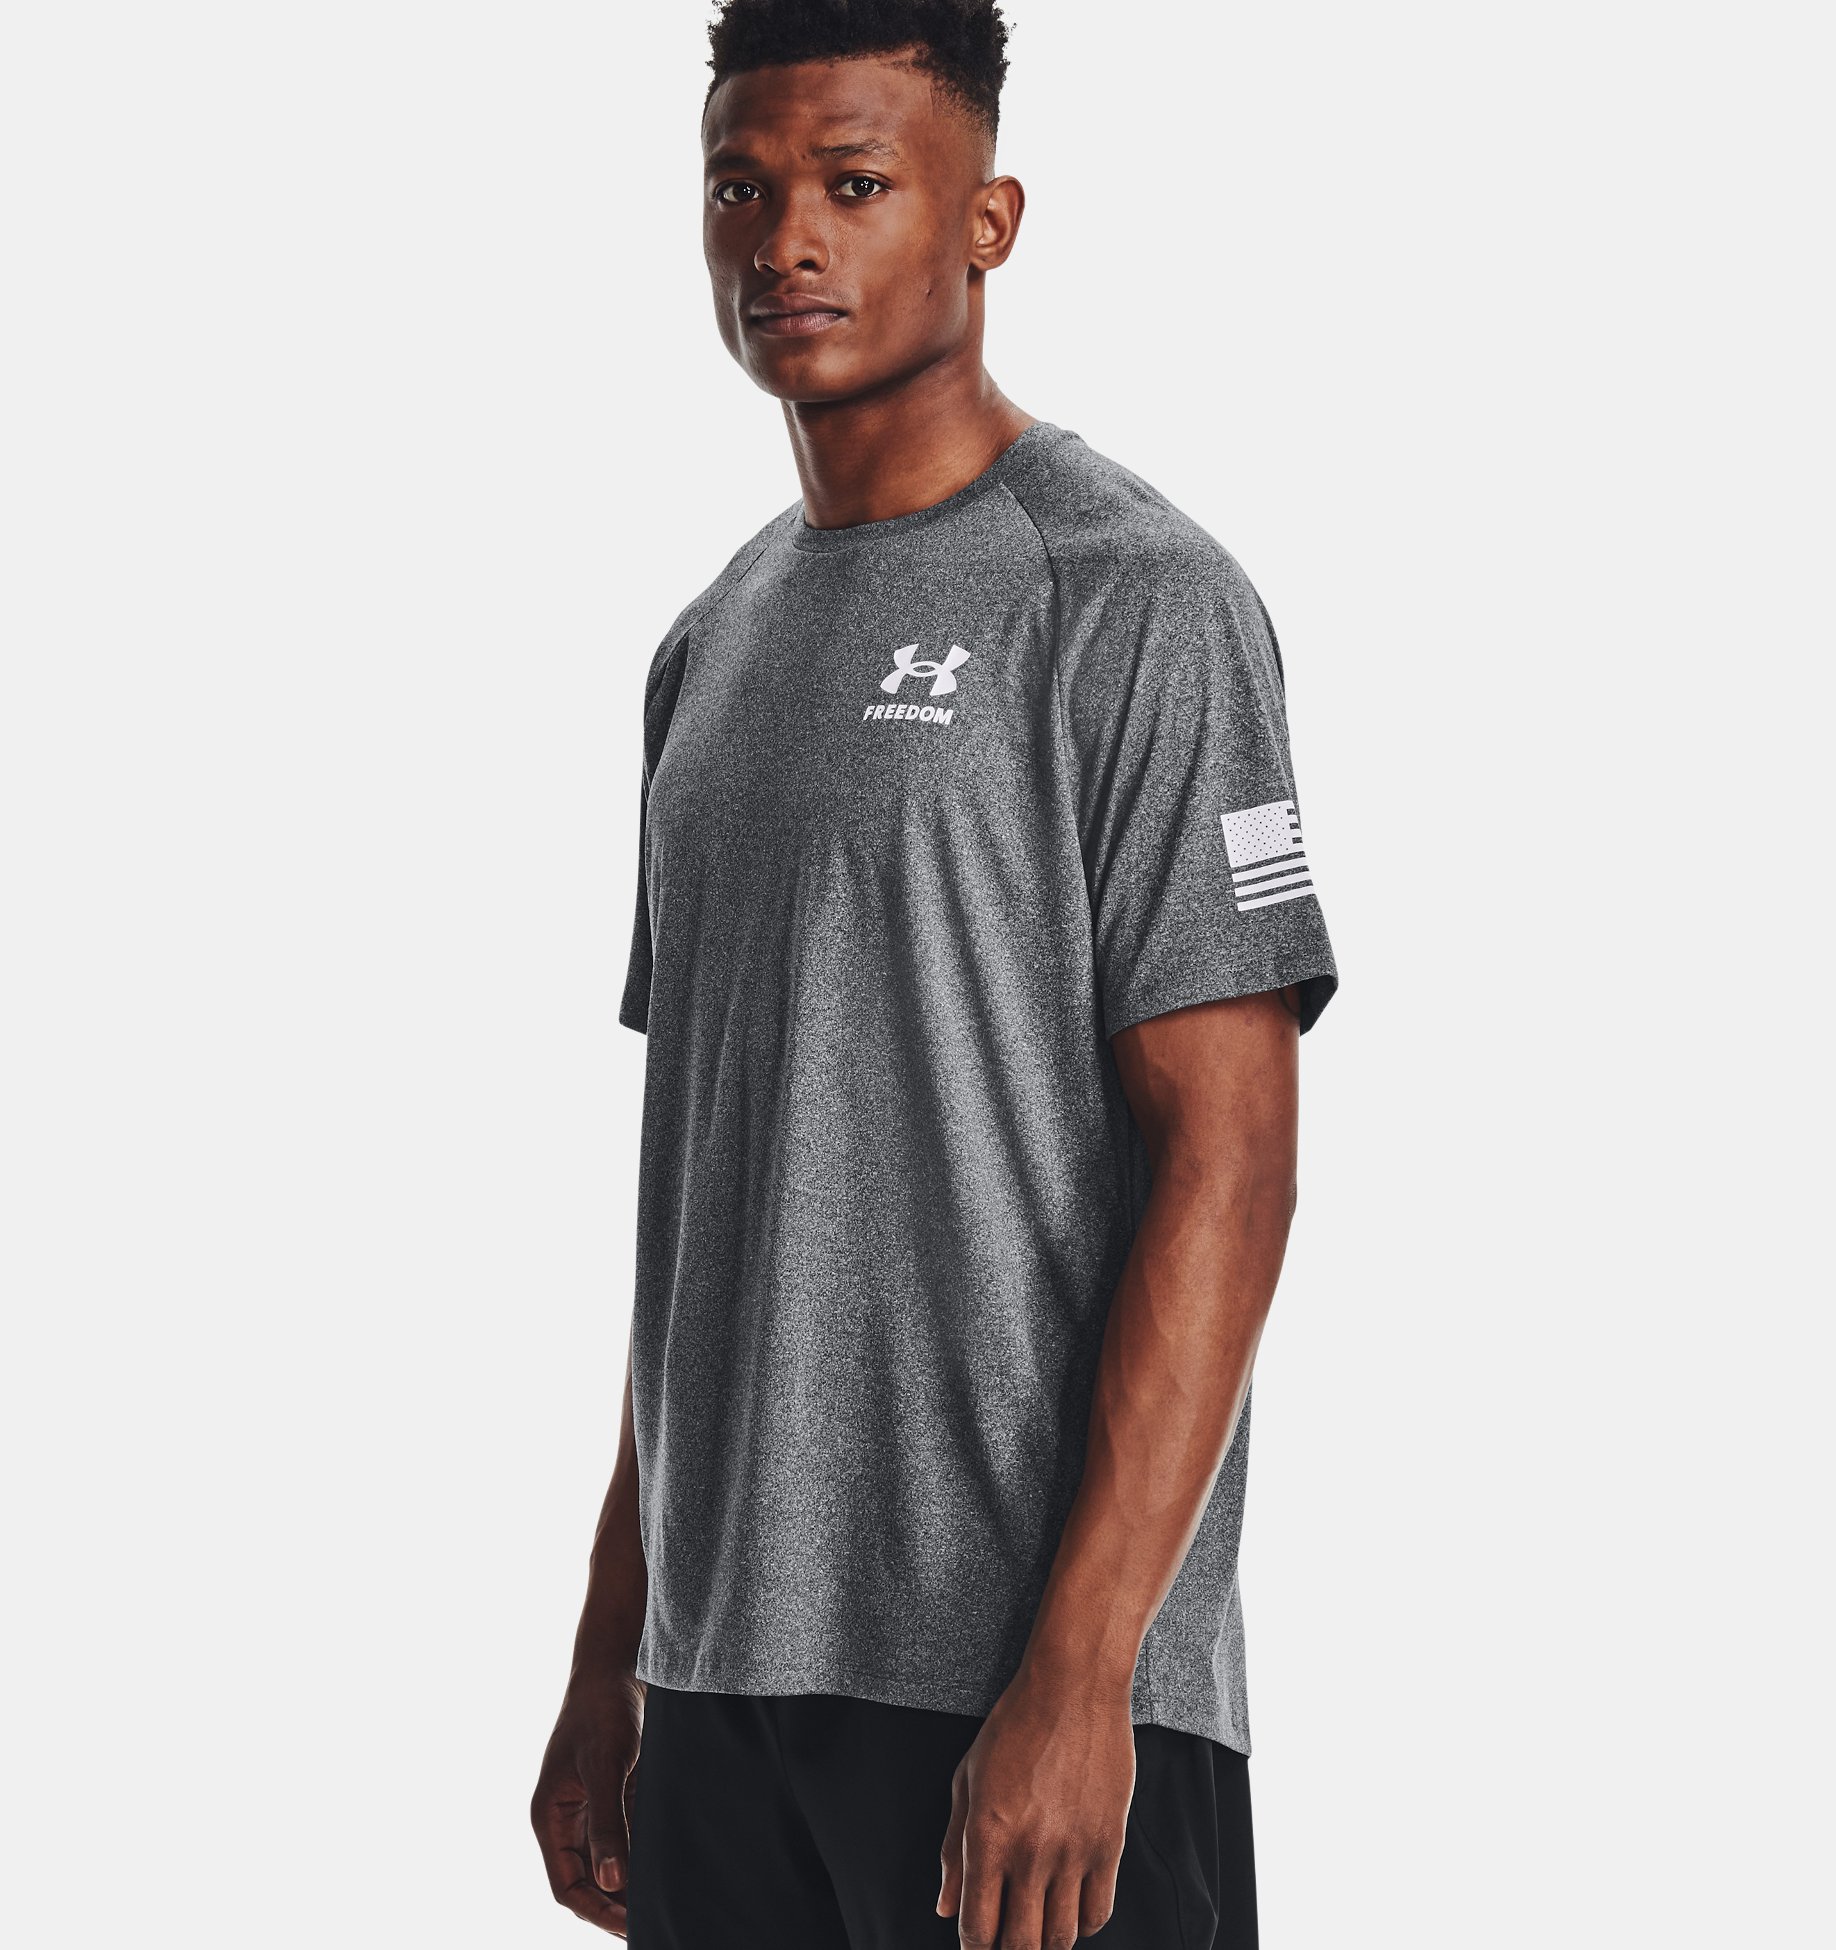 Under Armour Mens RUN Graphic Print Fill T Shirt Tee Top Grey Sports Running 